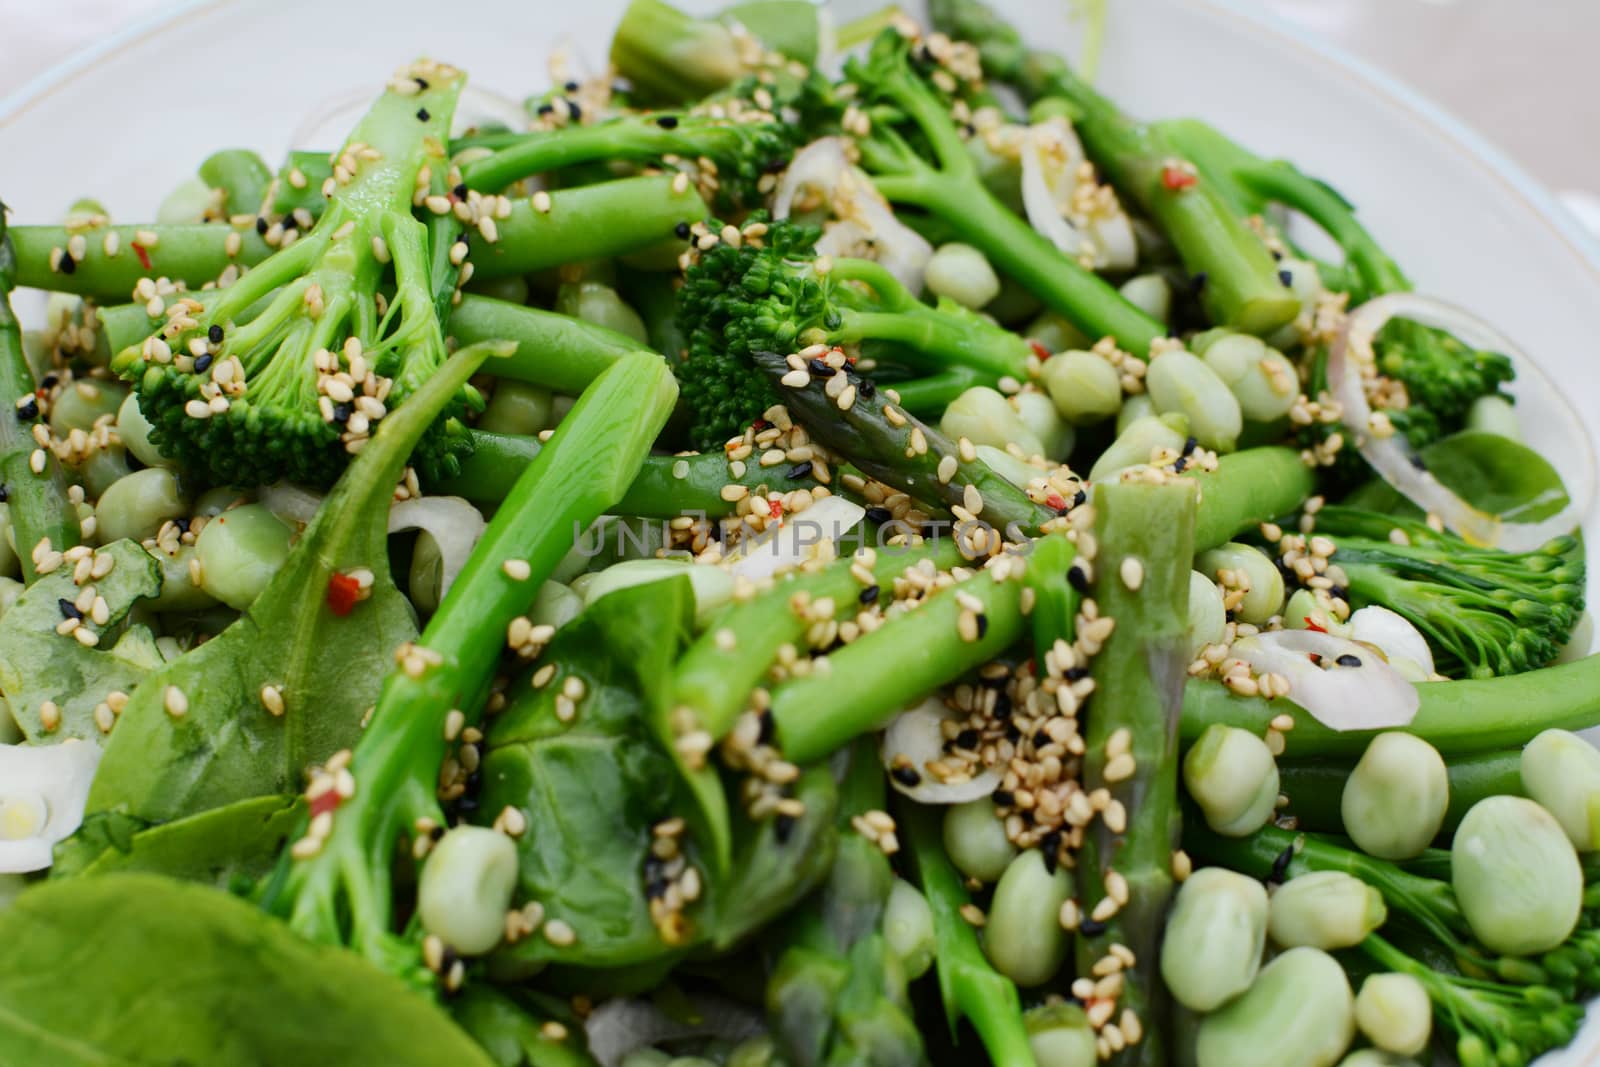 Tasty spring salad of broccoli, asparagus and beans by sarahdoow